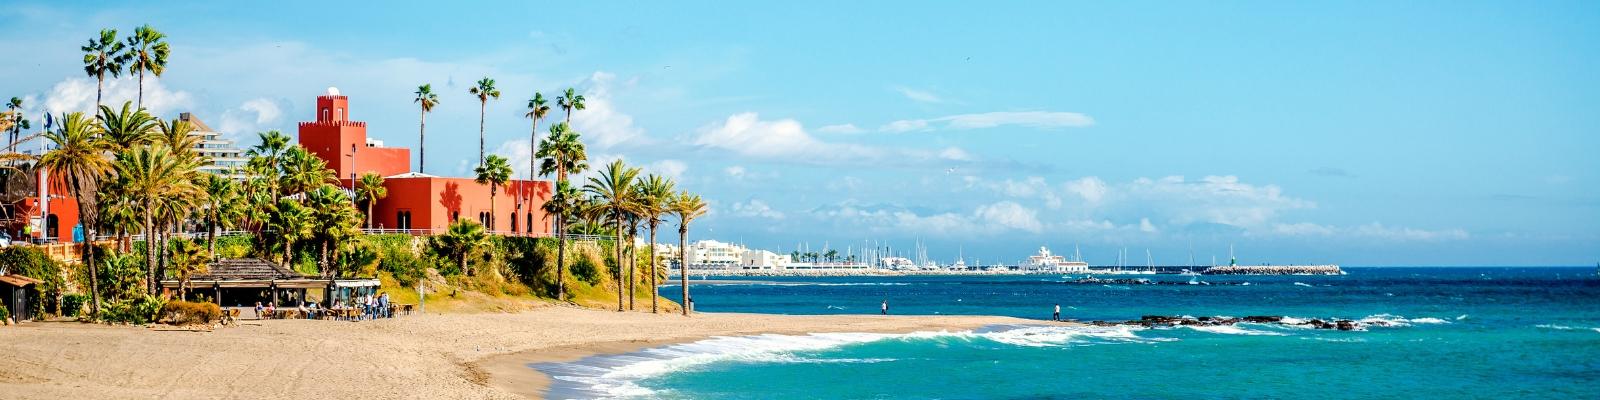 Puerto Banus Marbella Spain Luxury & Style Autumn October 2021 Costa del  Sol